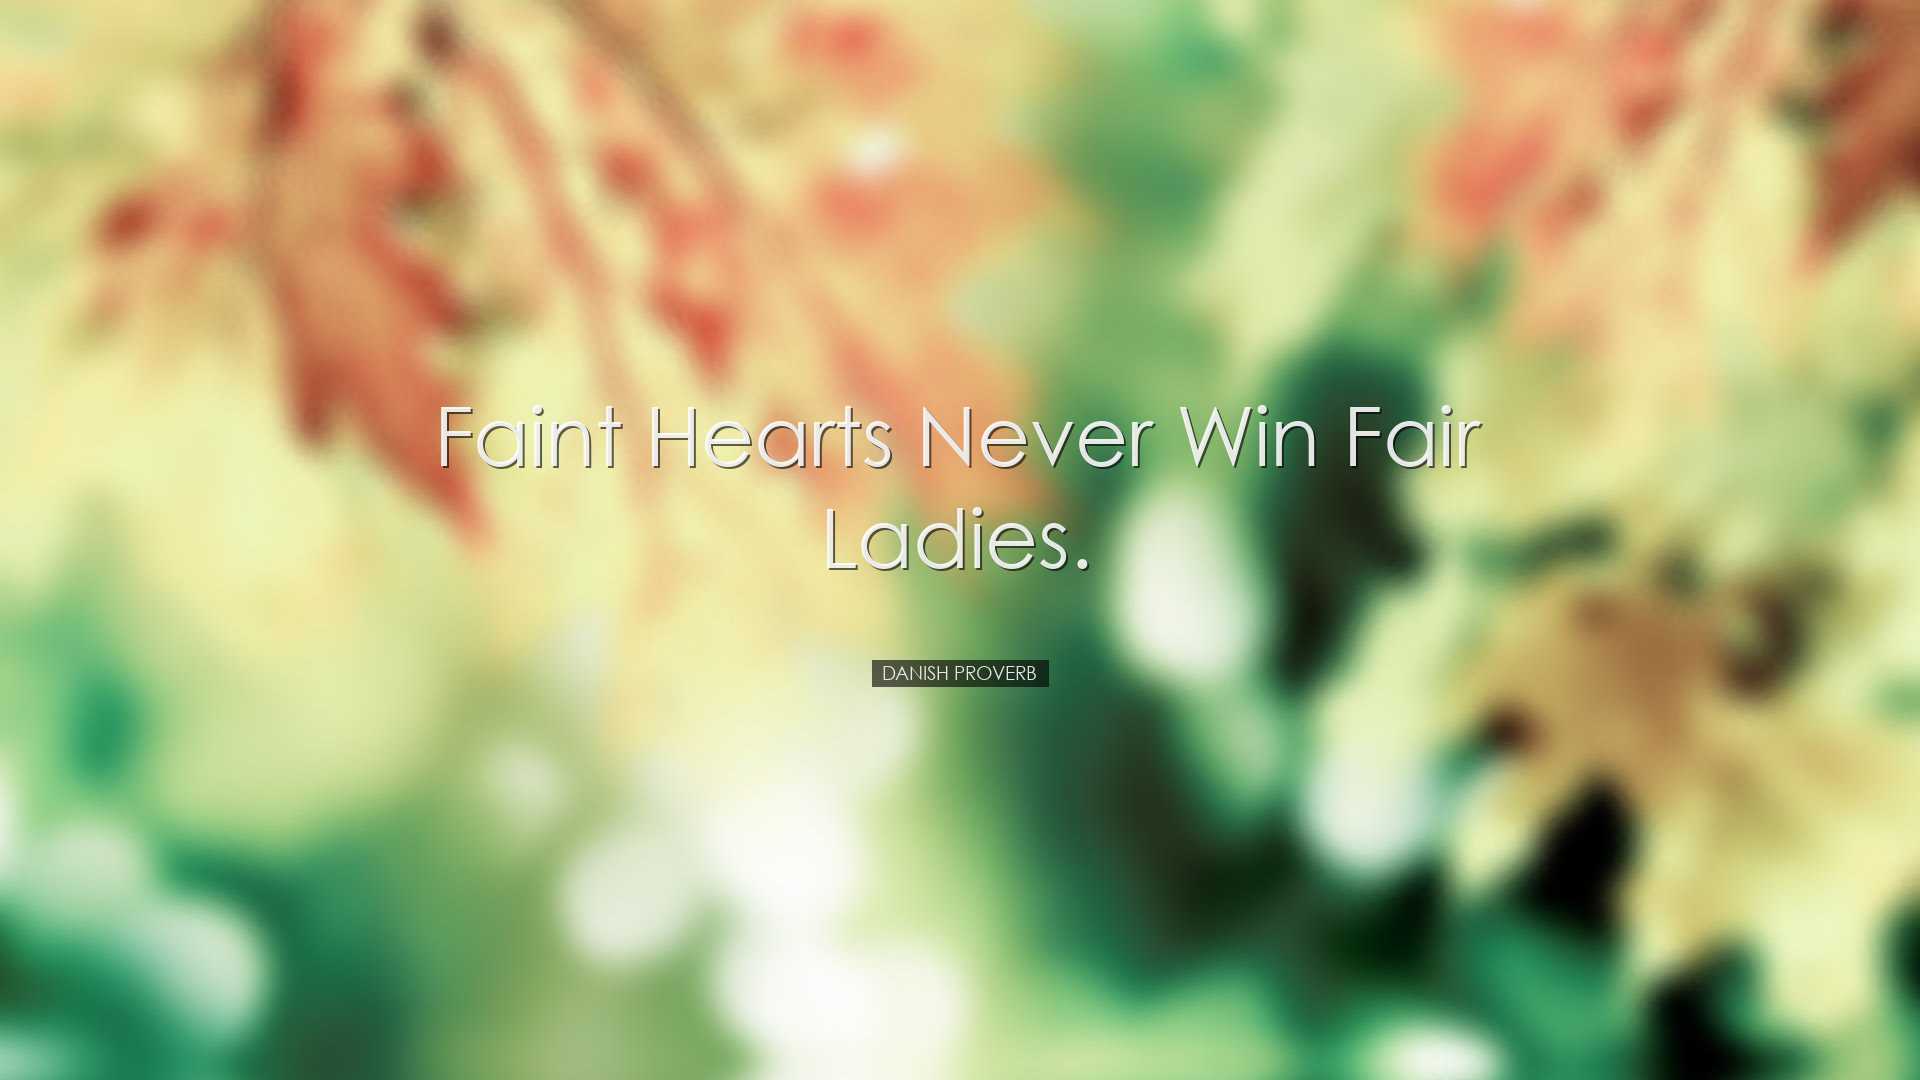 Faint hearts never win fair ladies. - Danish proverb